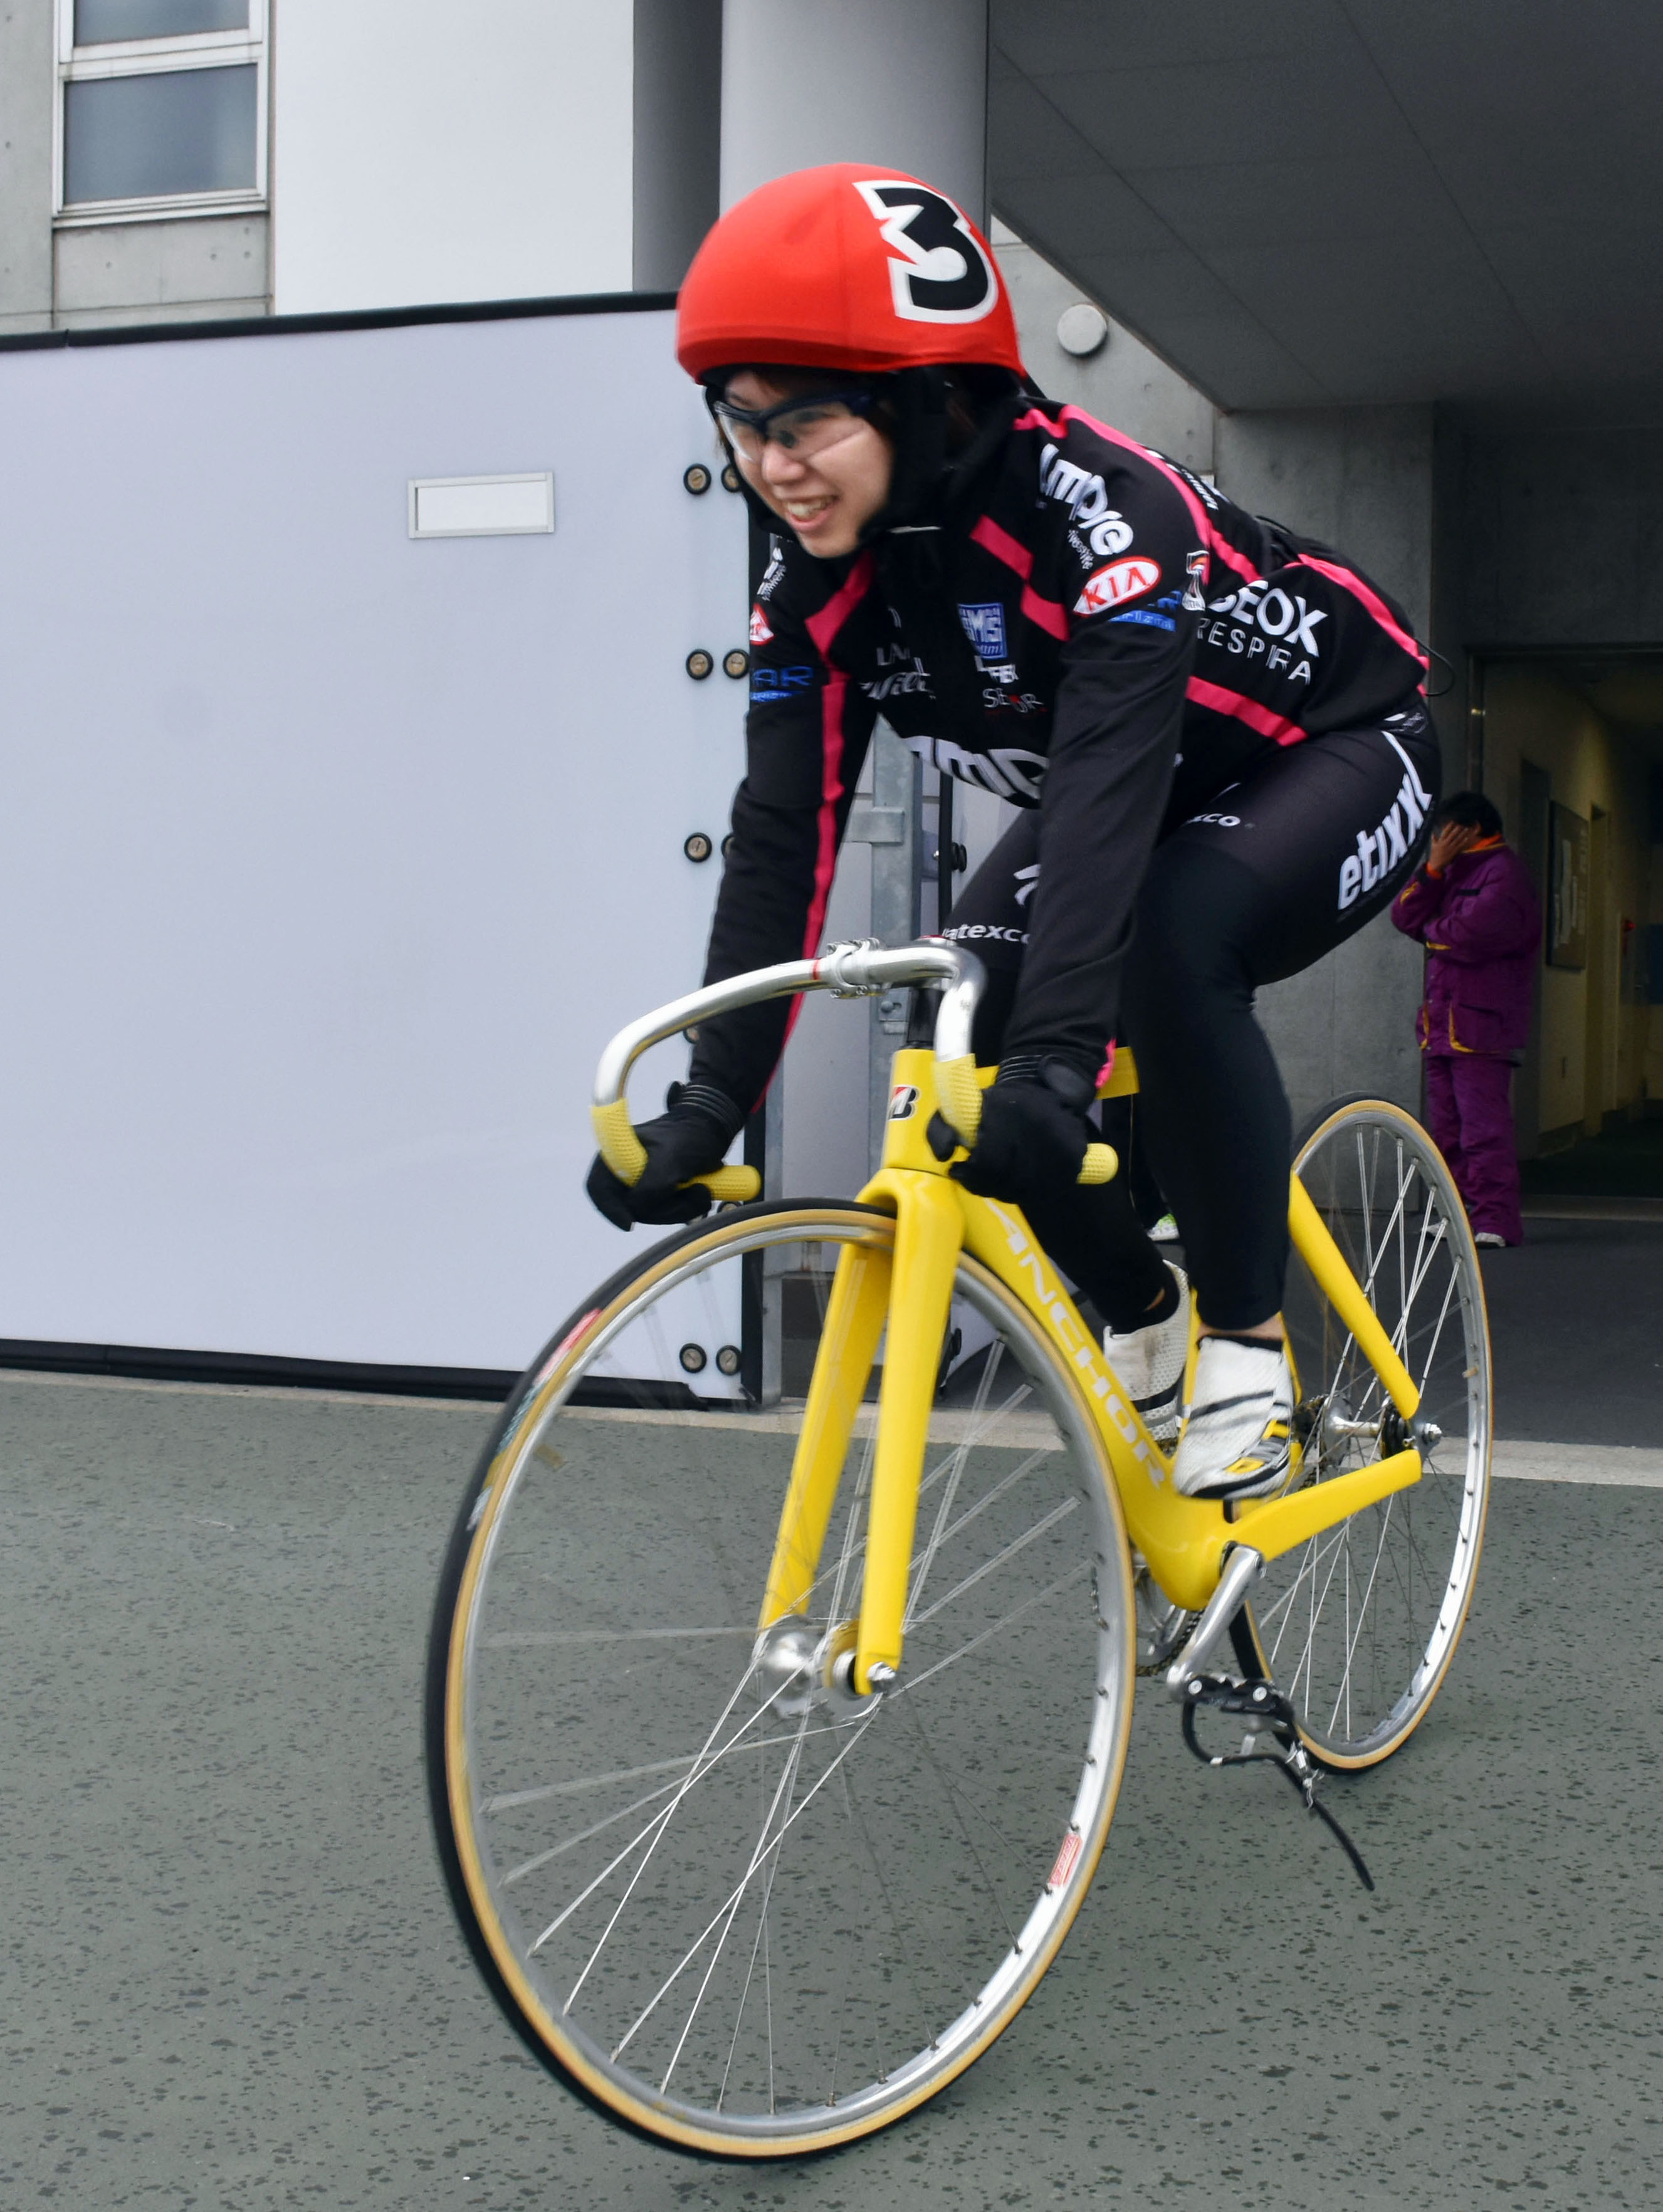 Hokkaido woman on track for professional cycling career | The Japan ...